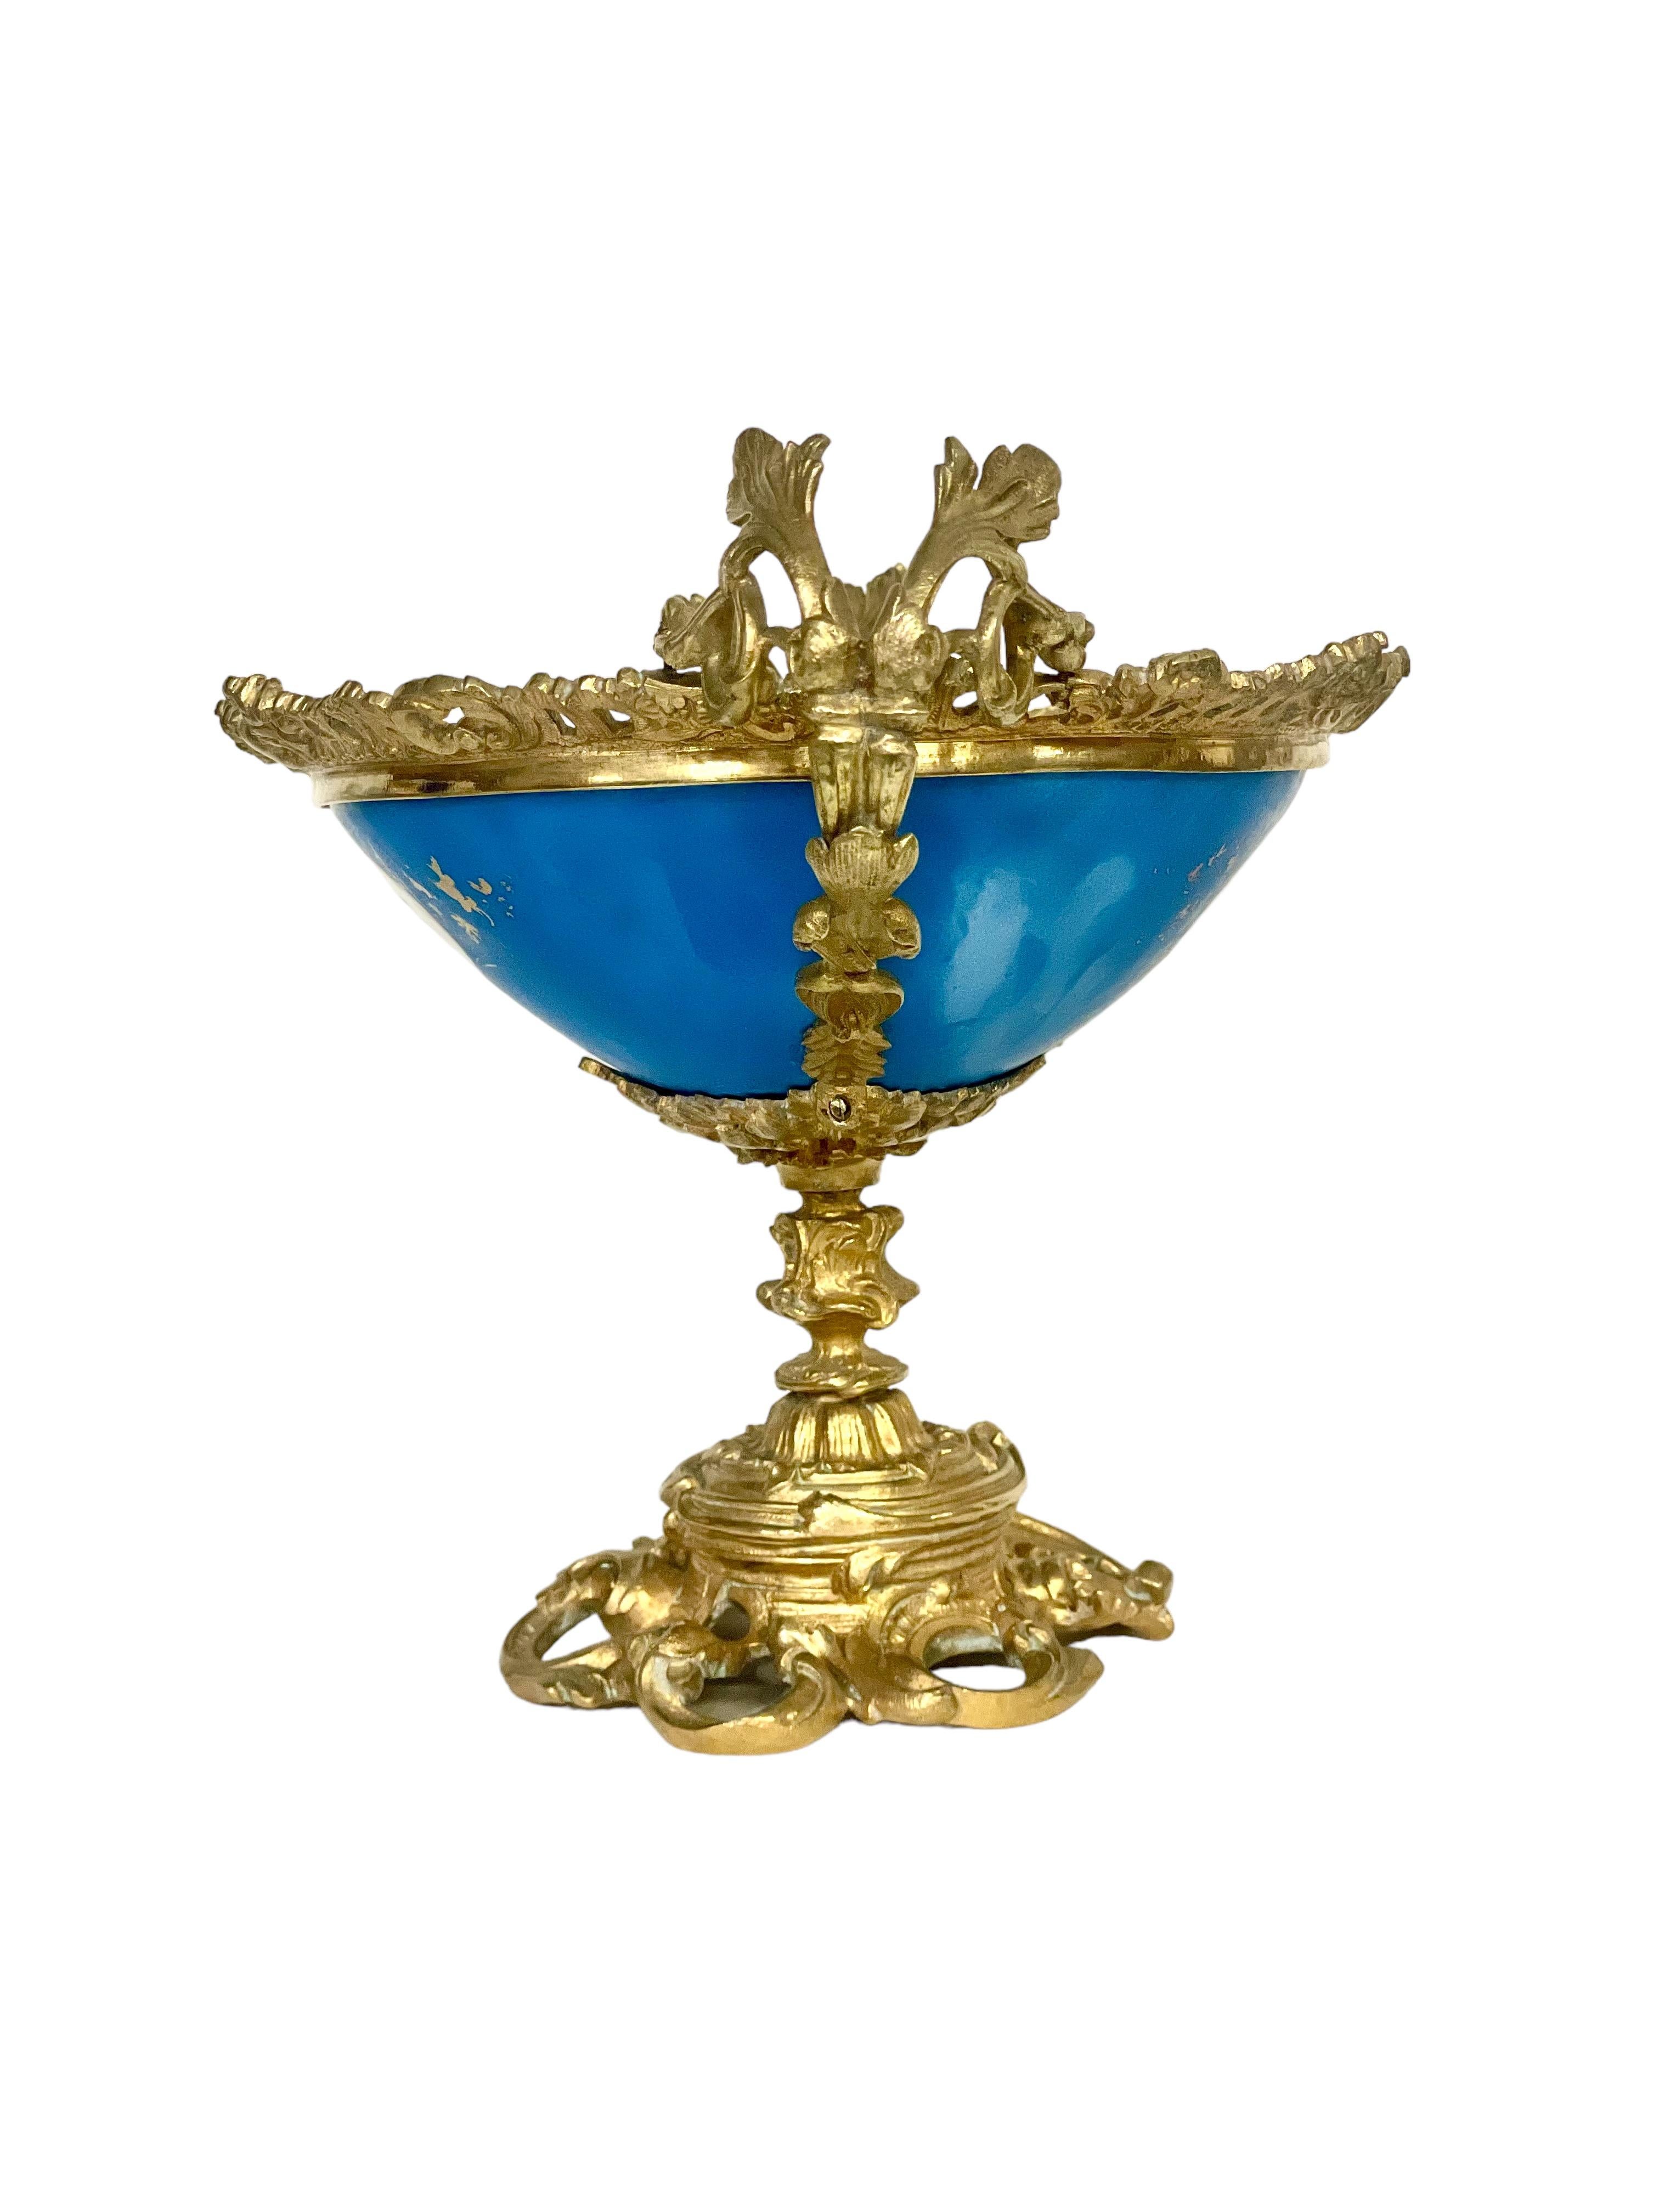 19th Century Napoleon III Sèvres Porcelain and Bronze Centerpiece For Sale 1